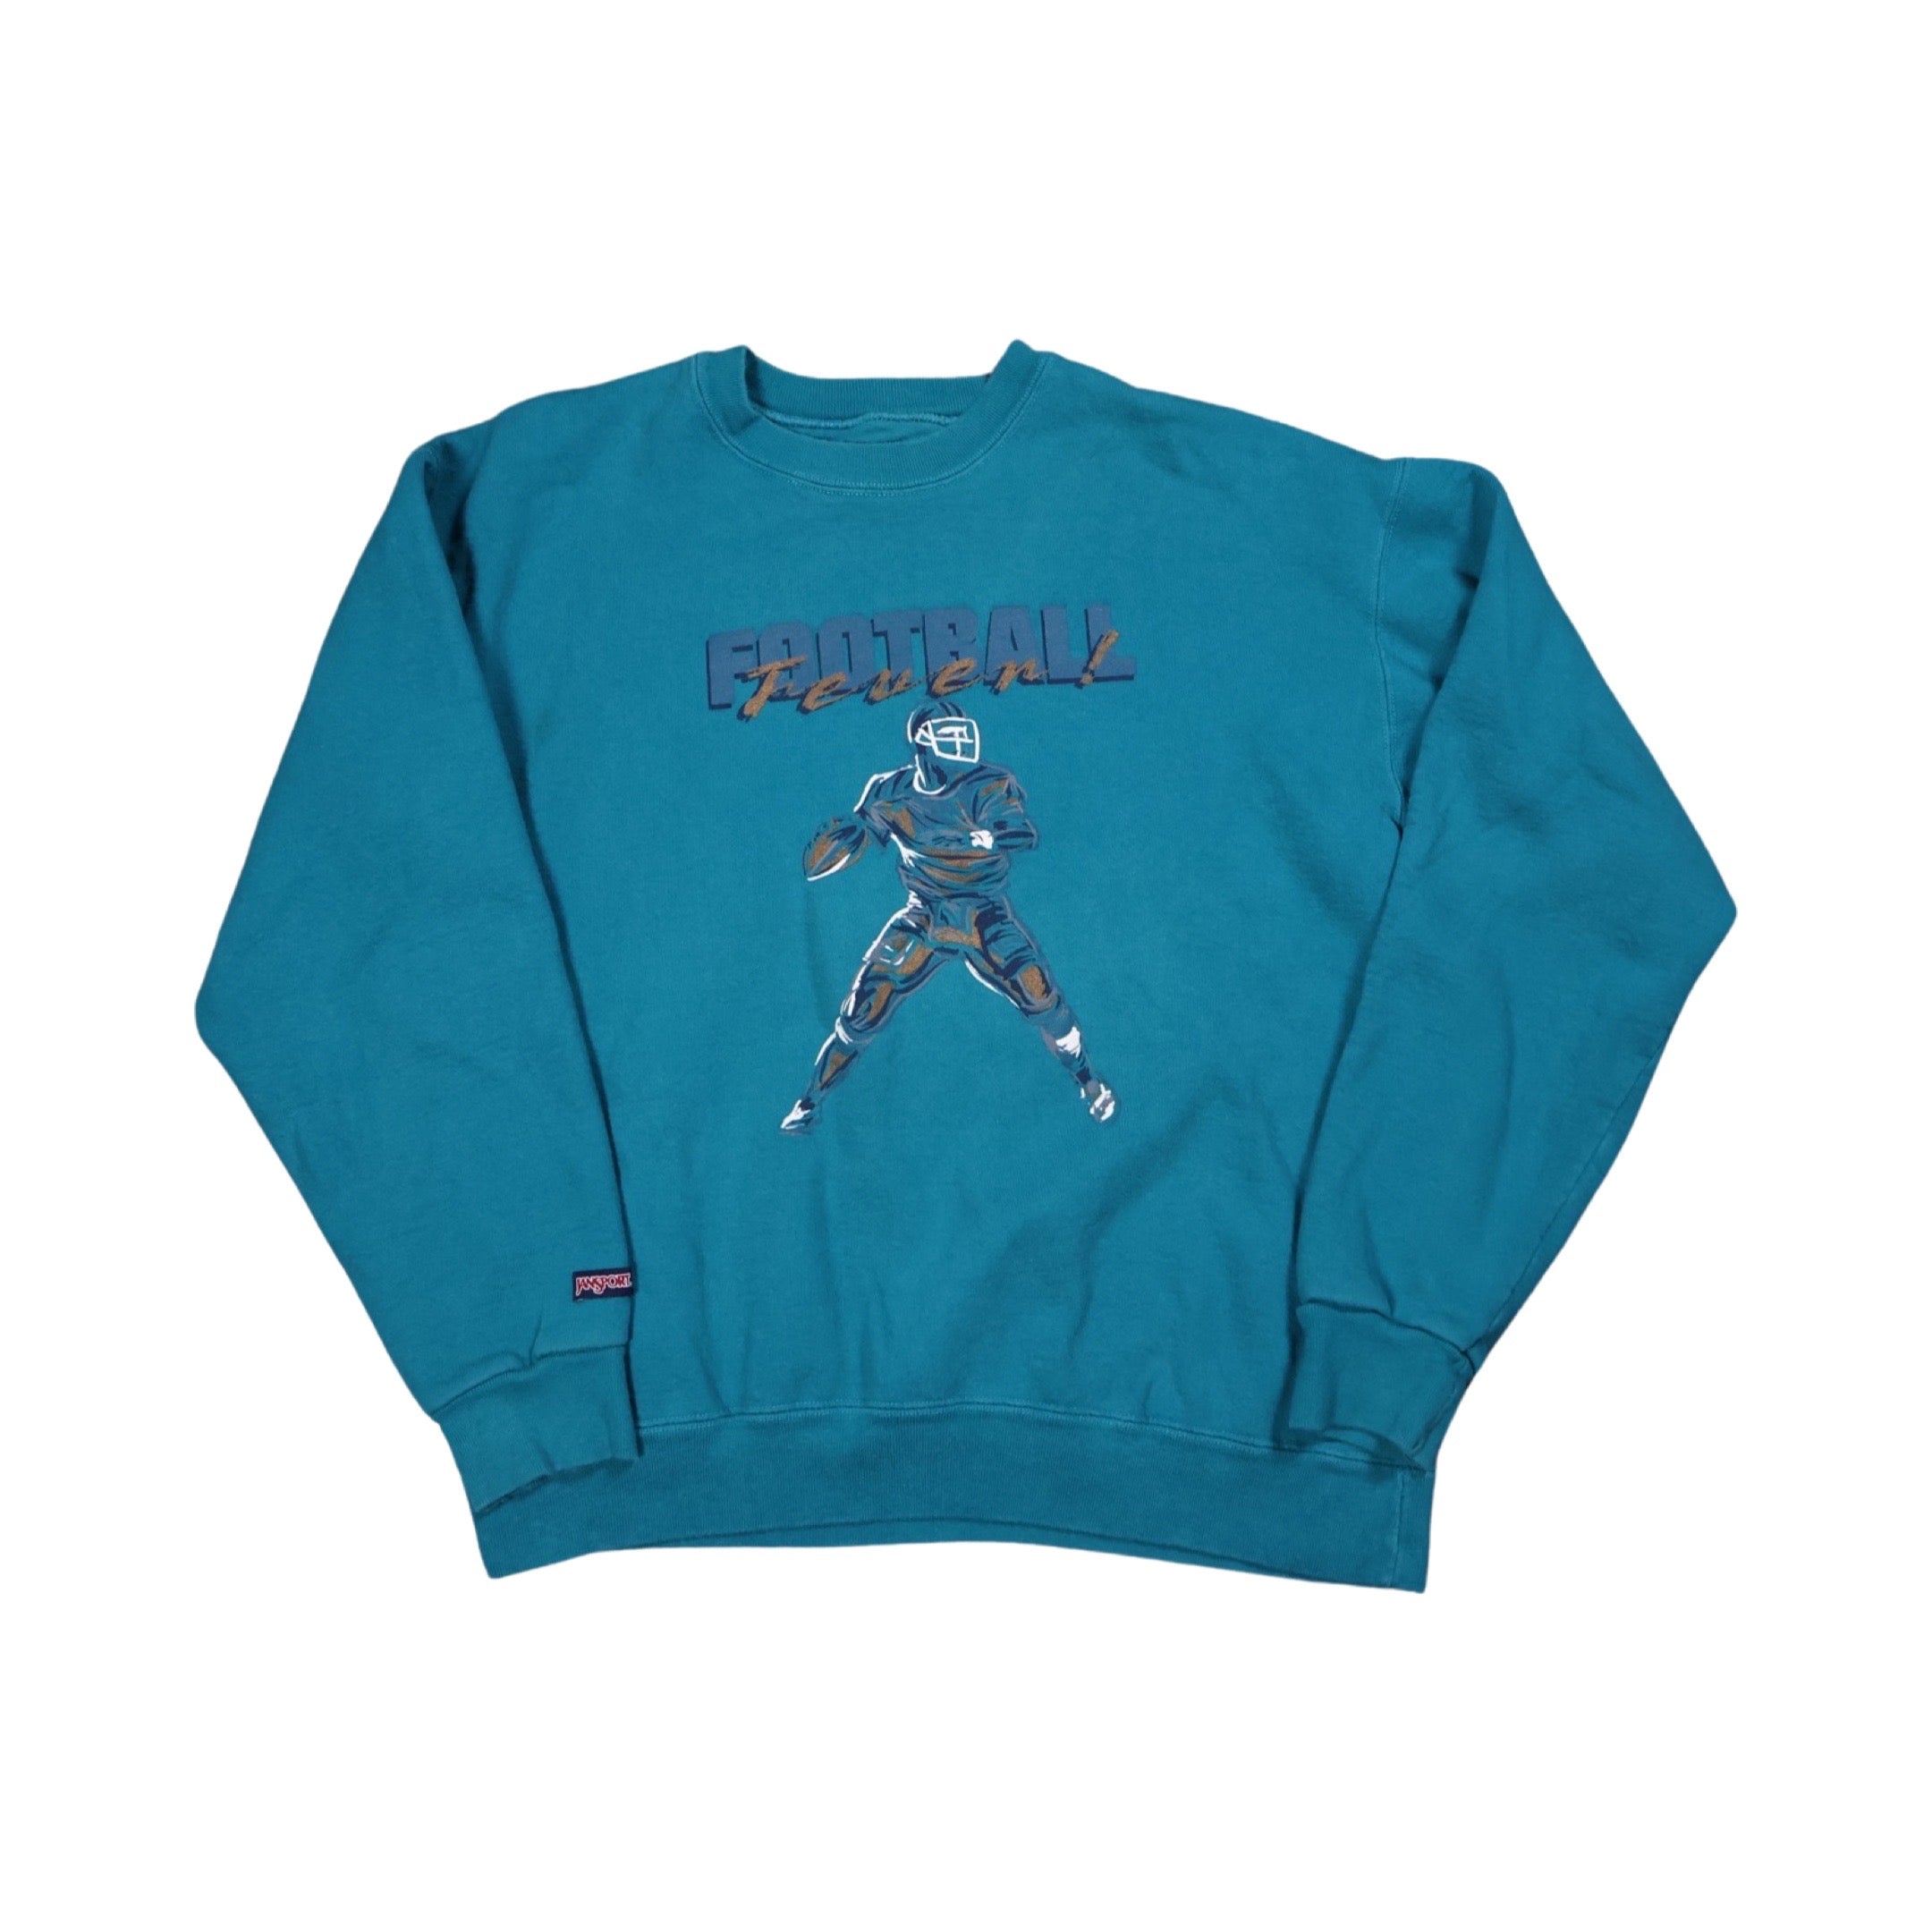 Football Fever 90s Sweater (XL)